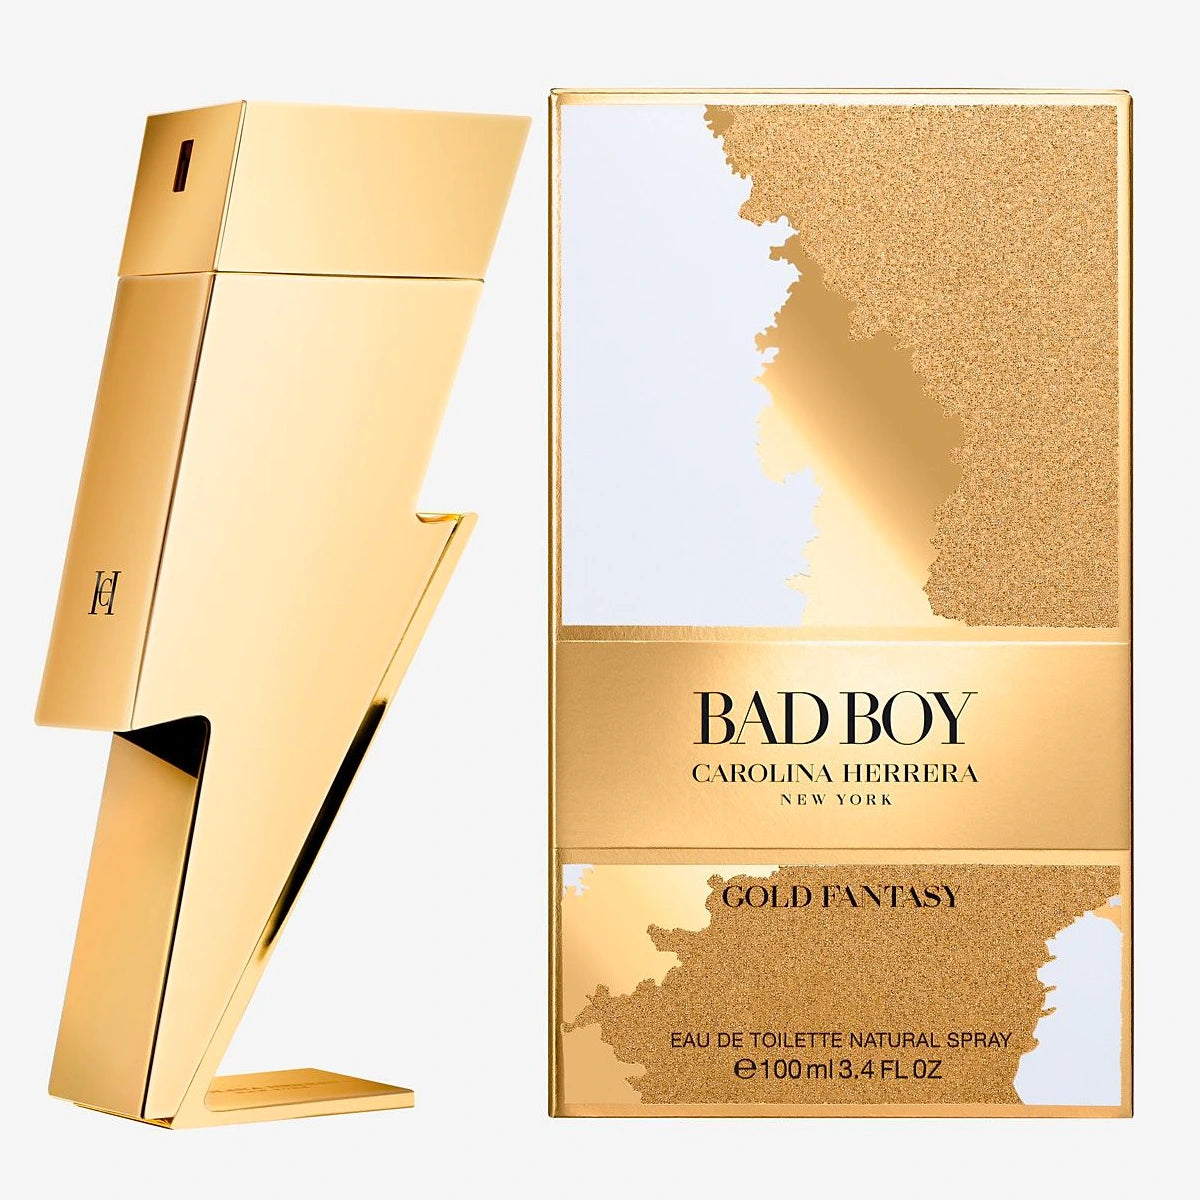 Carolina Herrera Men's Bad Boy Gold Fantasy EDT Spray 3.4 oz Fragrances  8411061028933 - Fragrances & Beauty, Bad Boy Gold Fantasy - Jomashop